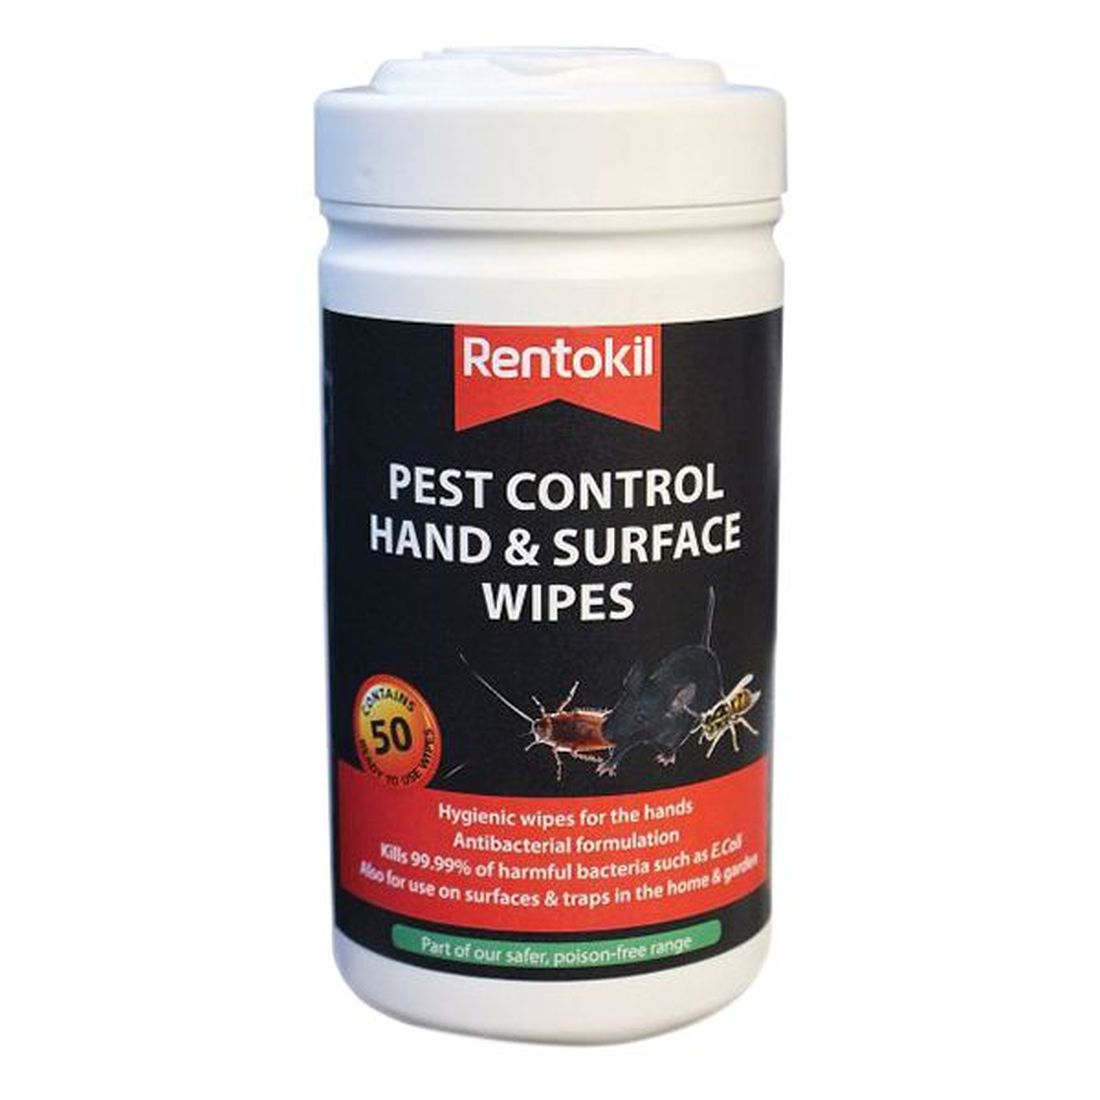 Rentokil Pest Control Hand & Surface Wipes 